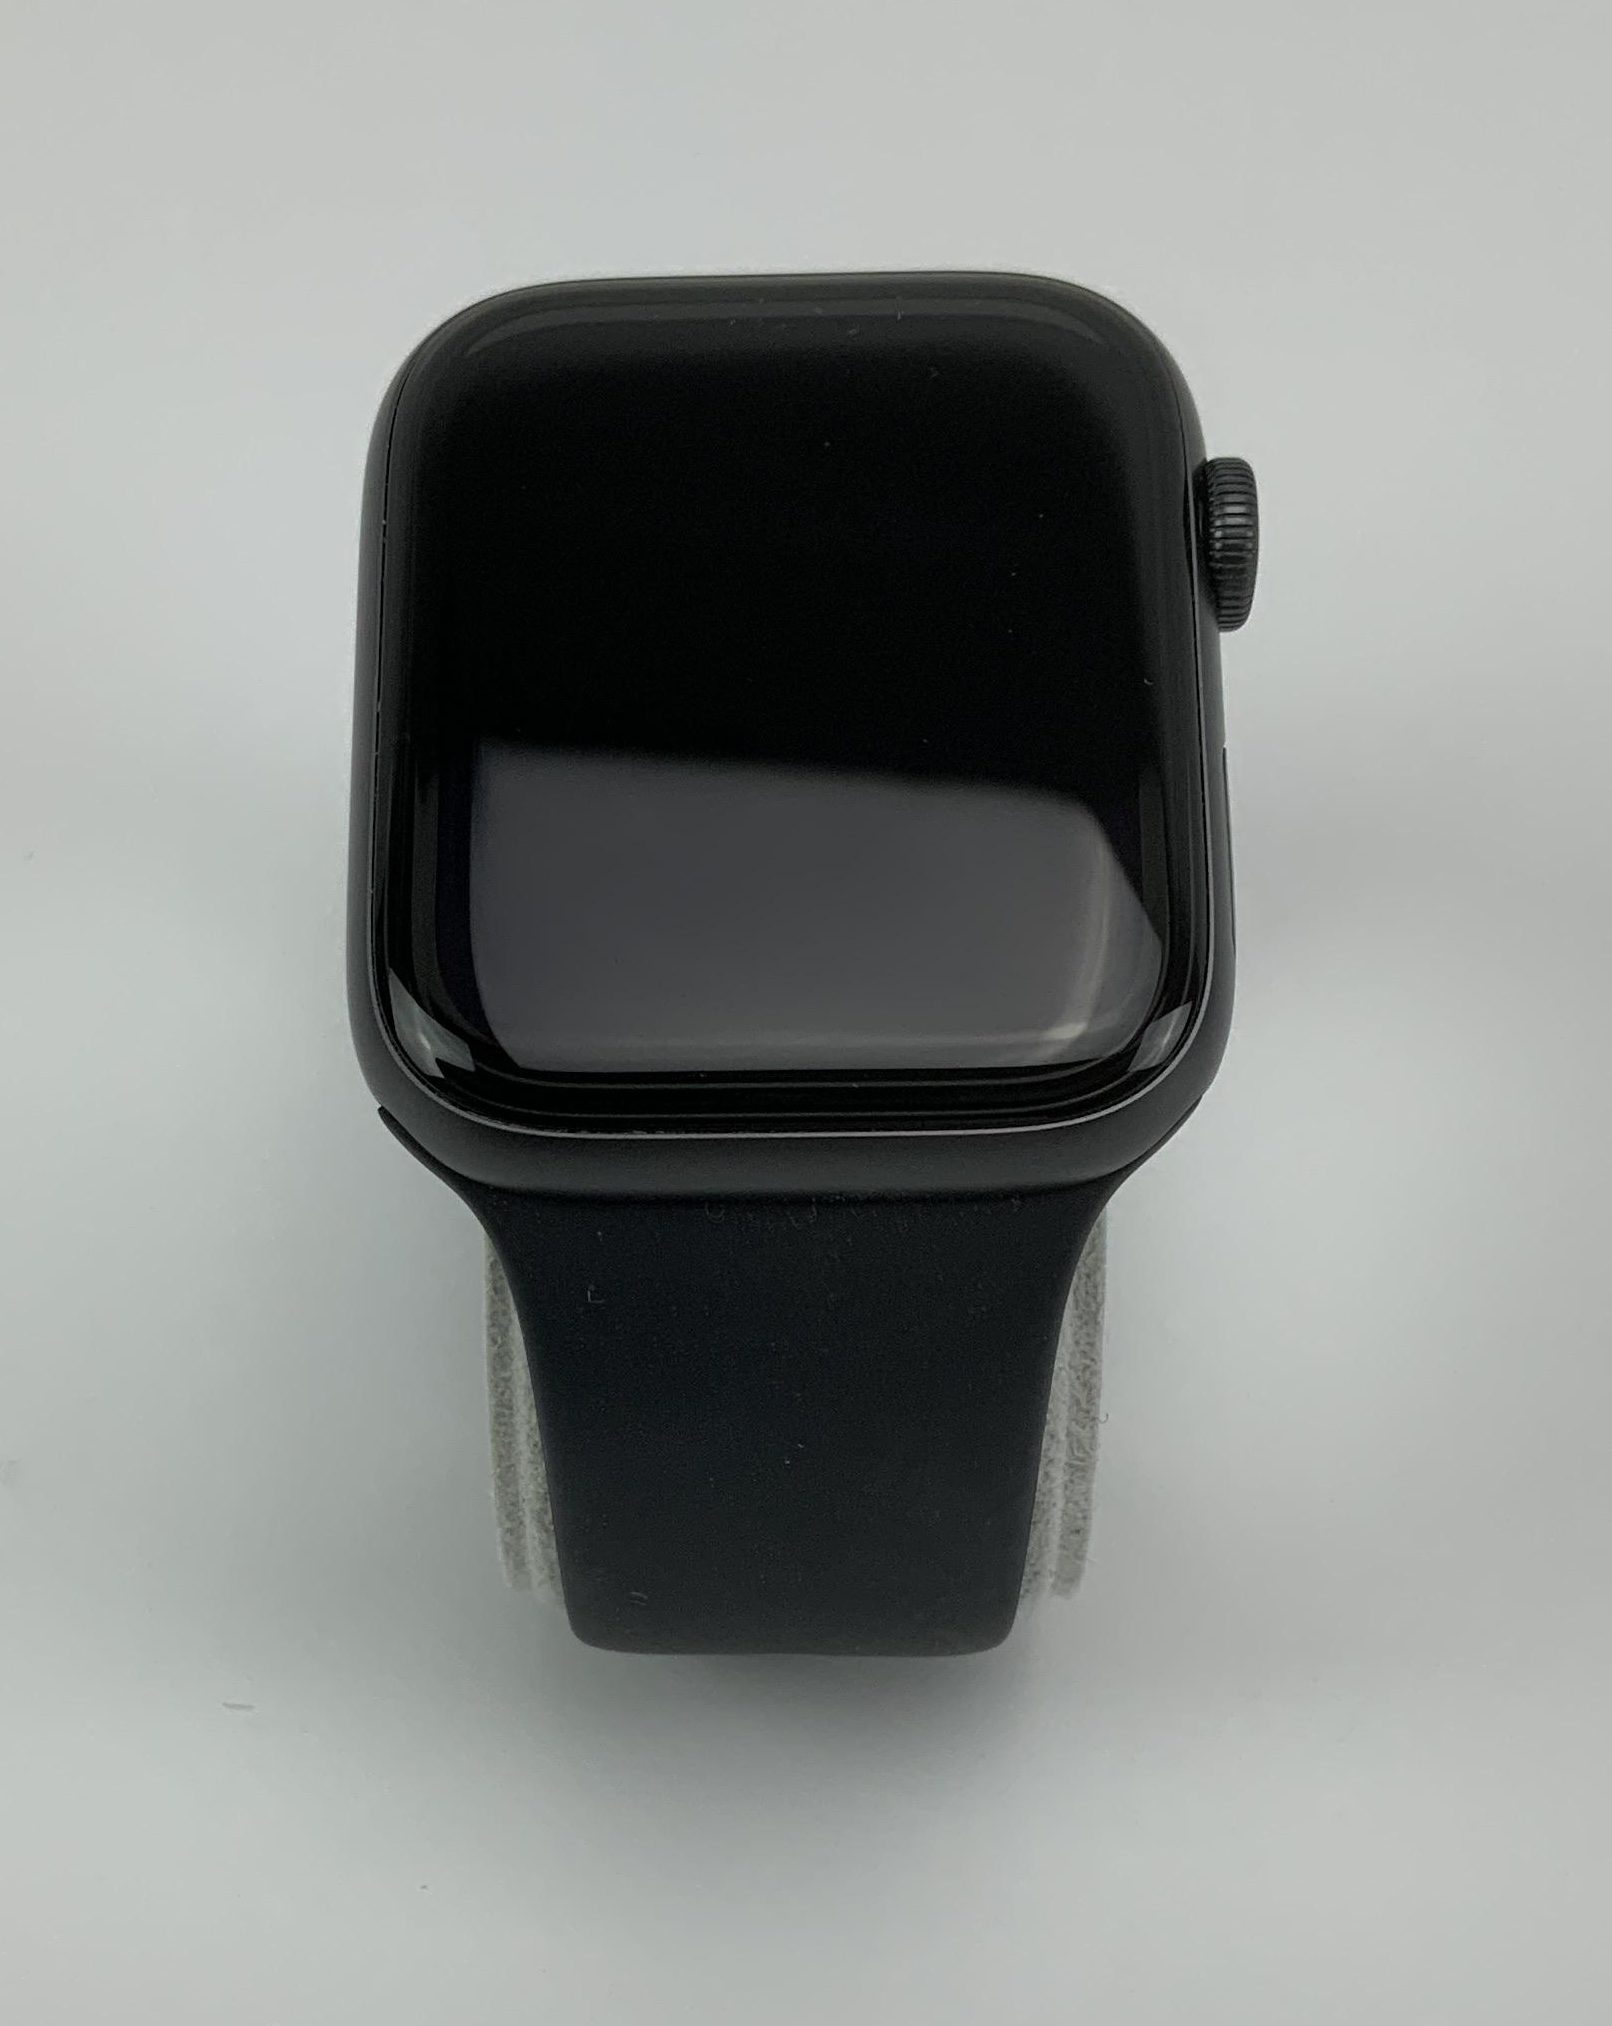 Watch Series 5 Aluminum Cellular (44mm), Space Gray, bild 1